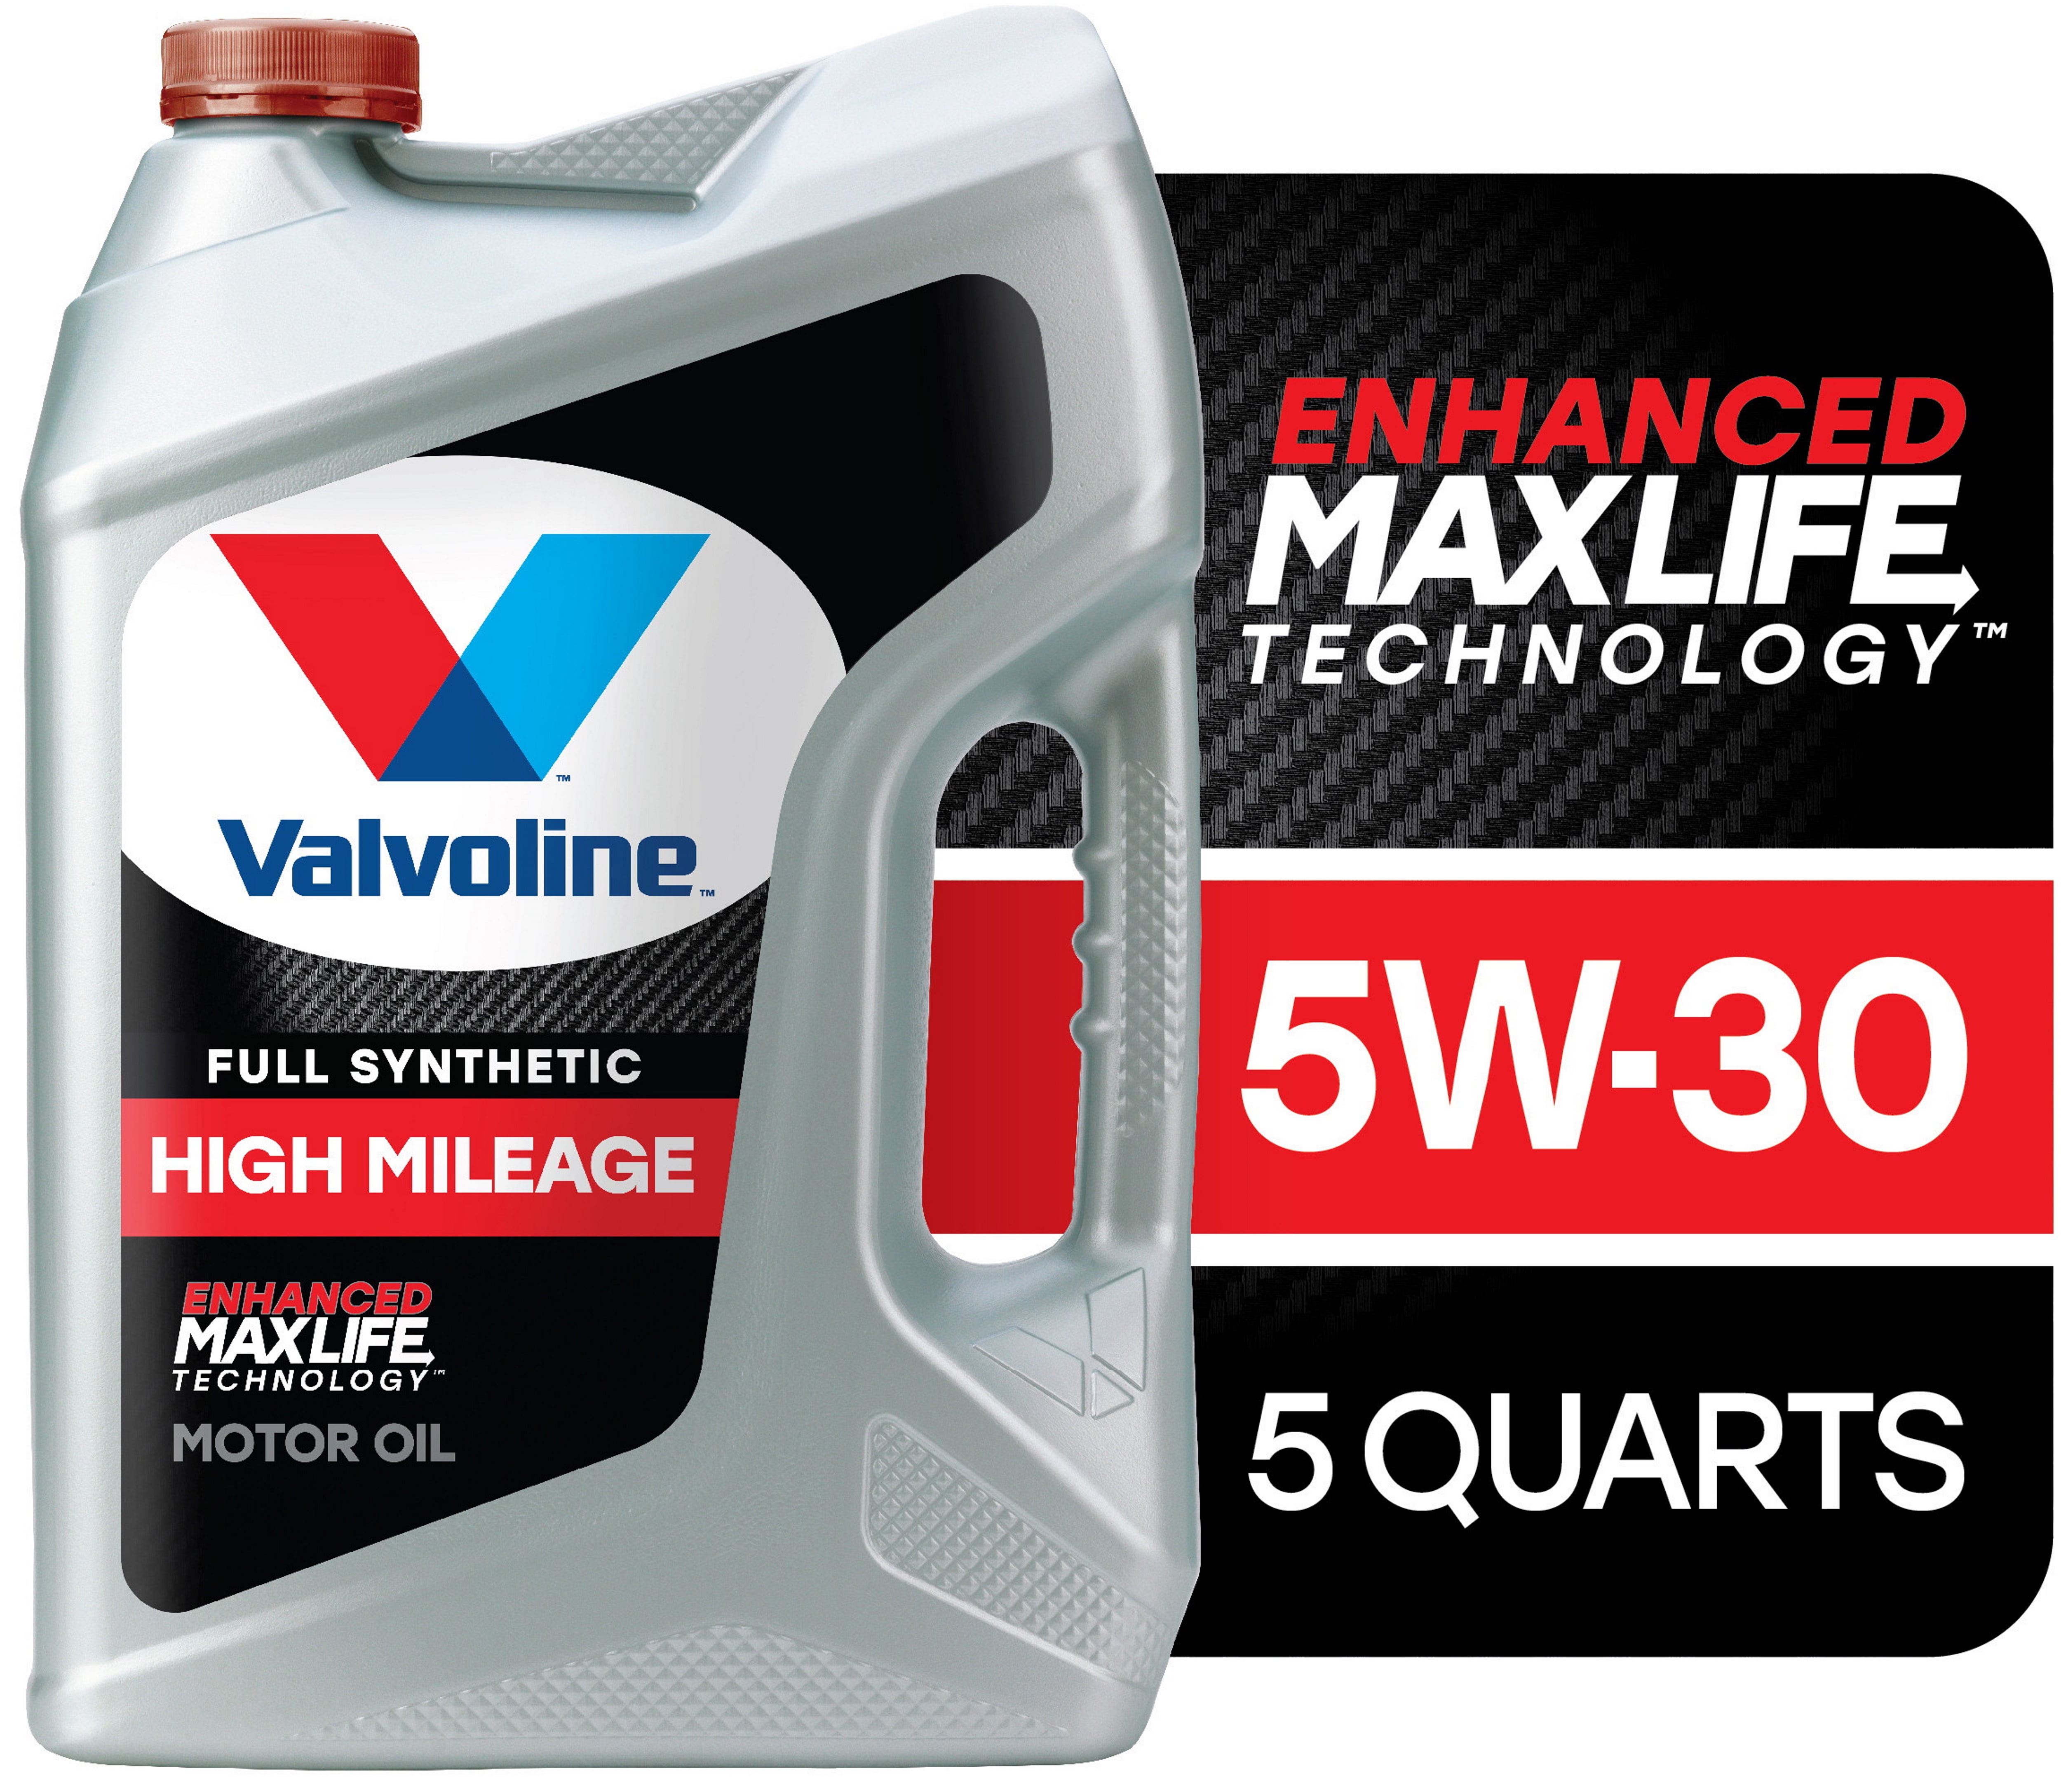 valvoline-full-synthetic-high-mileage-maxlife-5w-30-motor-oil-5-qt